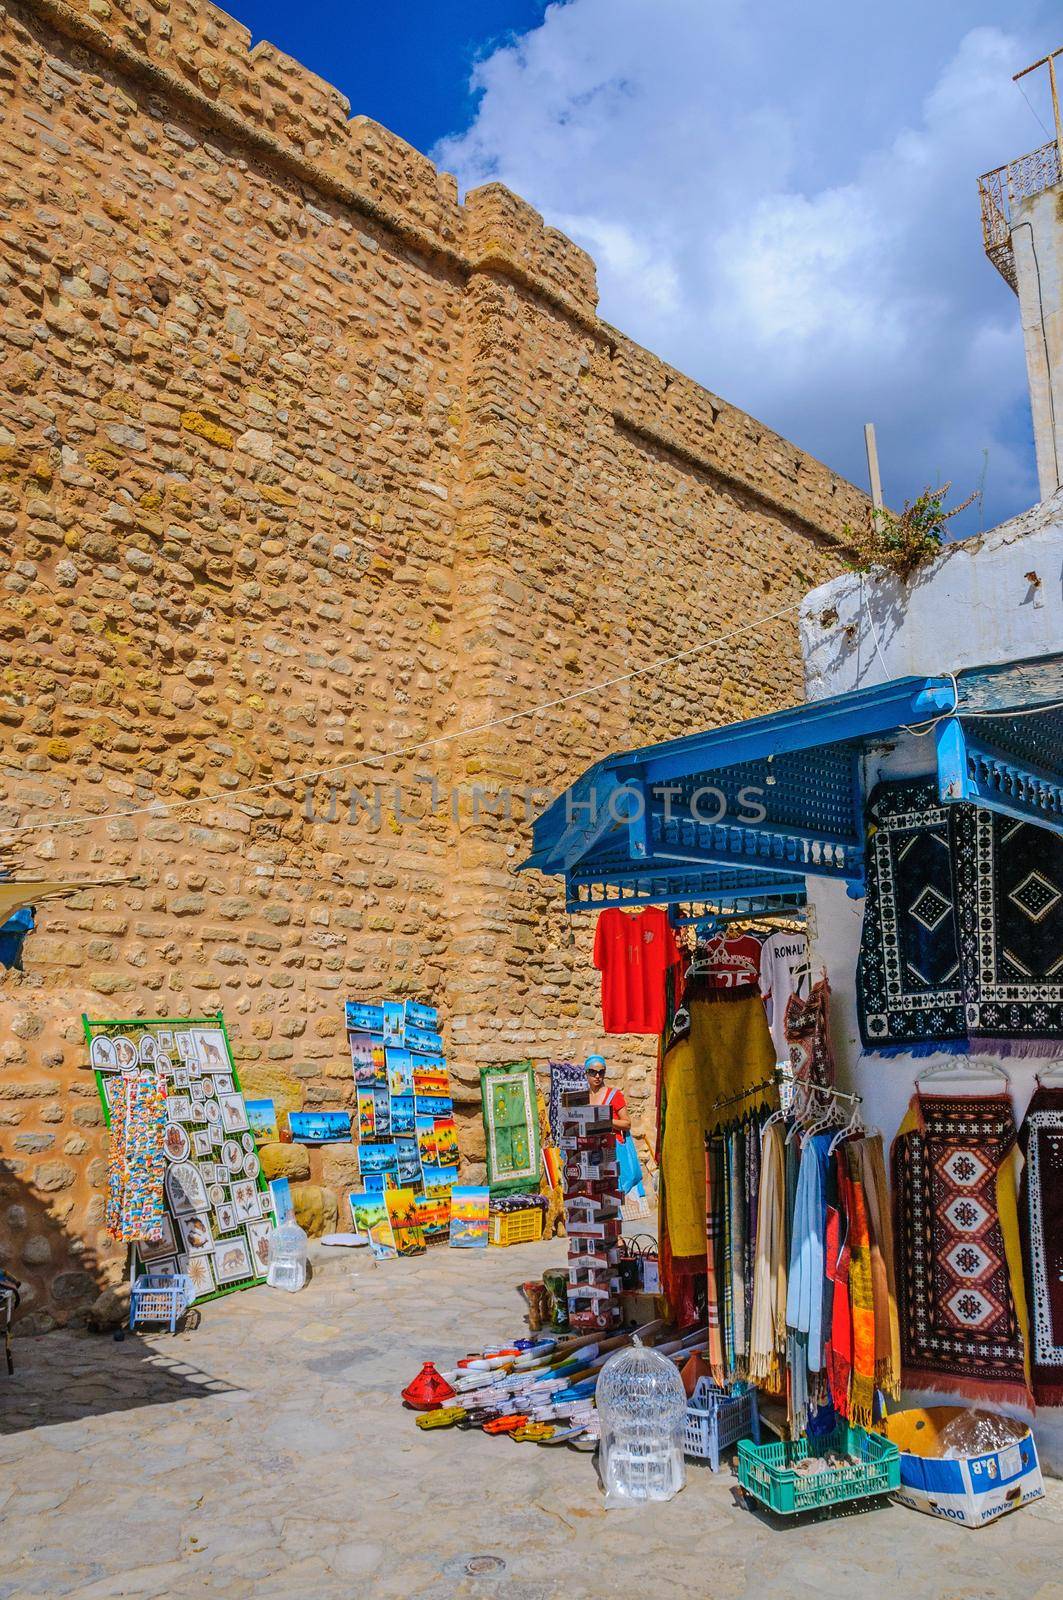 HAMMAMET, TUNISIA - Oct 2014: Stone ancient wall of Medina with bazaar on October 6, 2014 in Hammamet, Tunisia